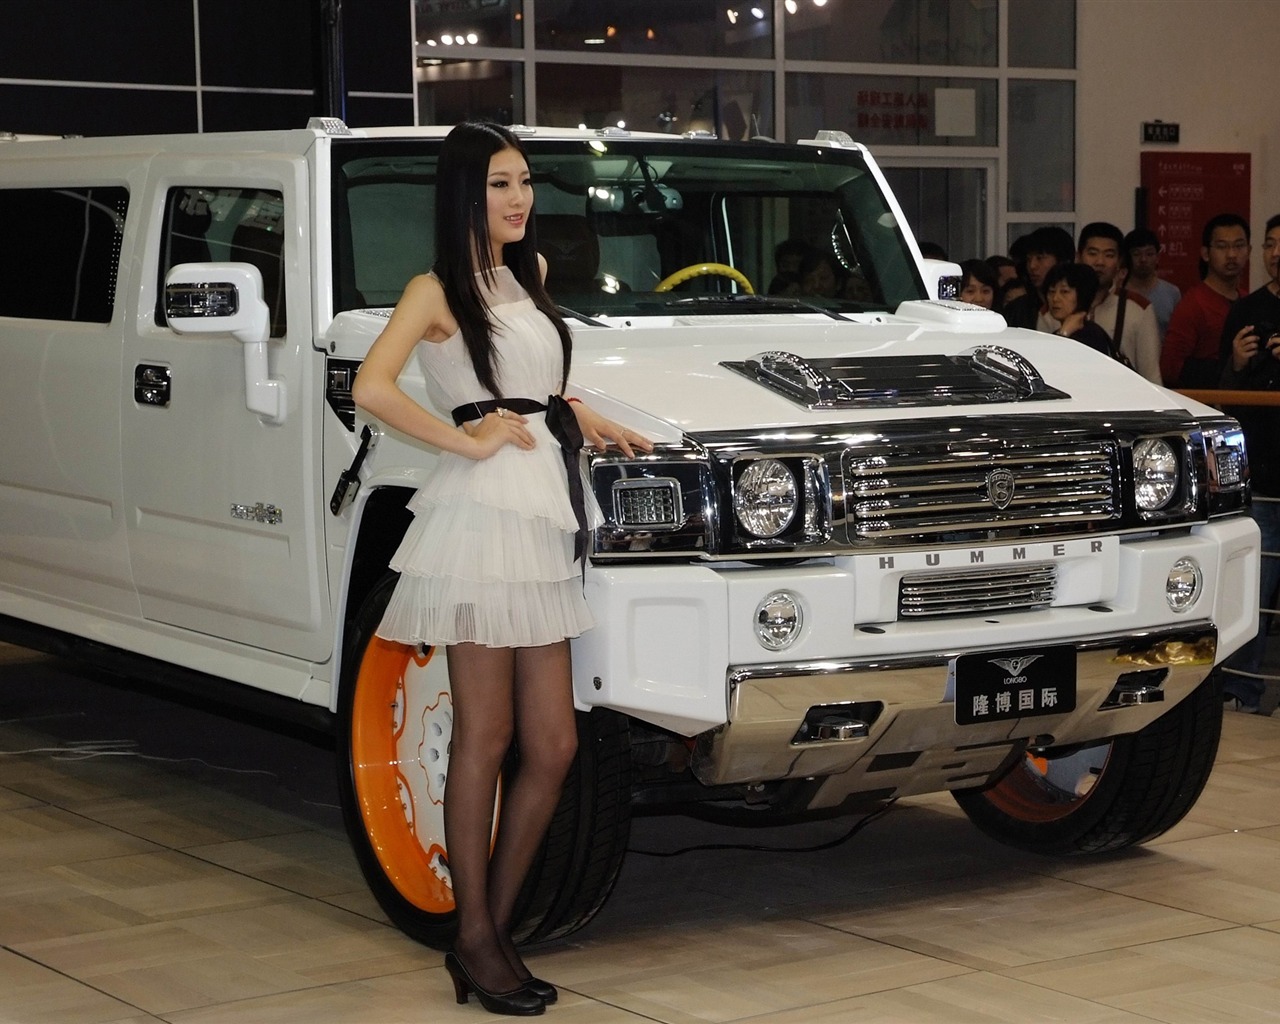 2010 Salón Internacional del Automóvil de Beijing Heung Che belleza (obras barras de refuerzo) #6 - 1280x1024